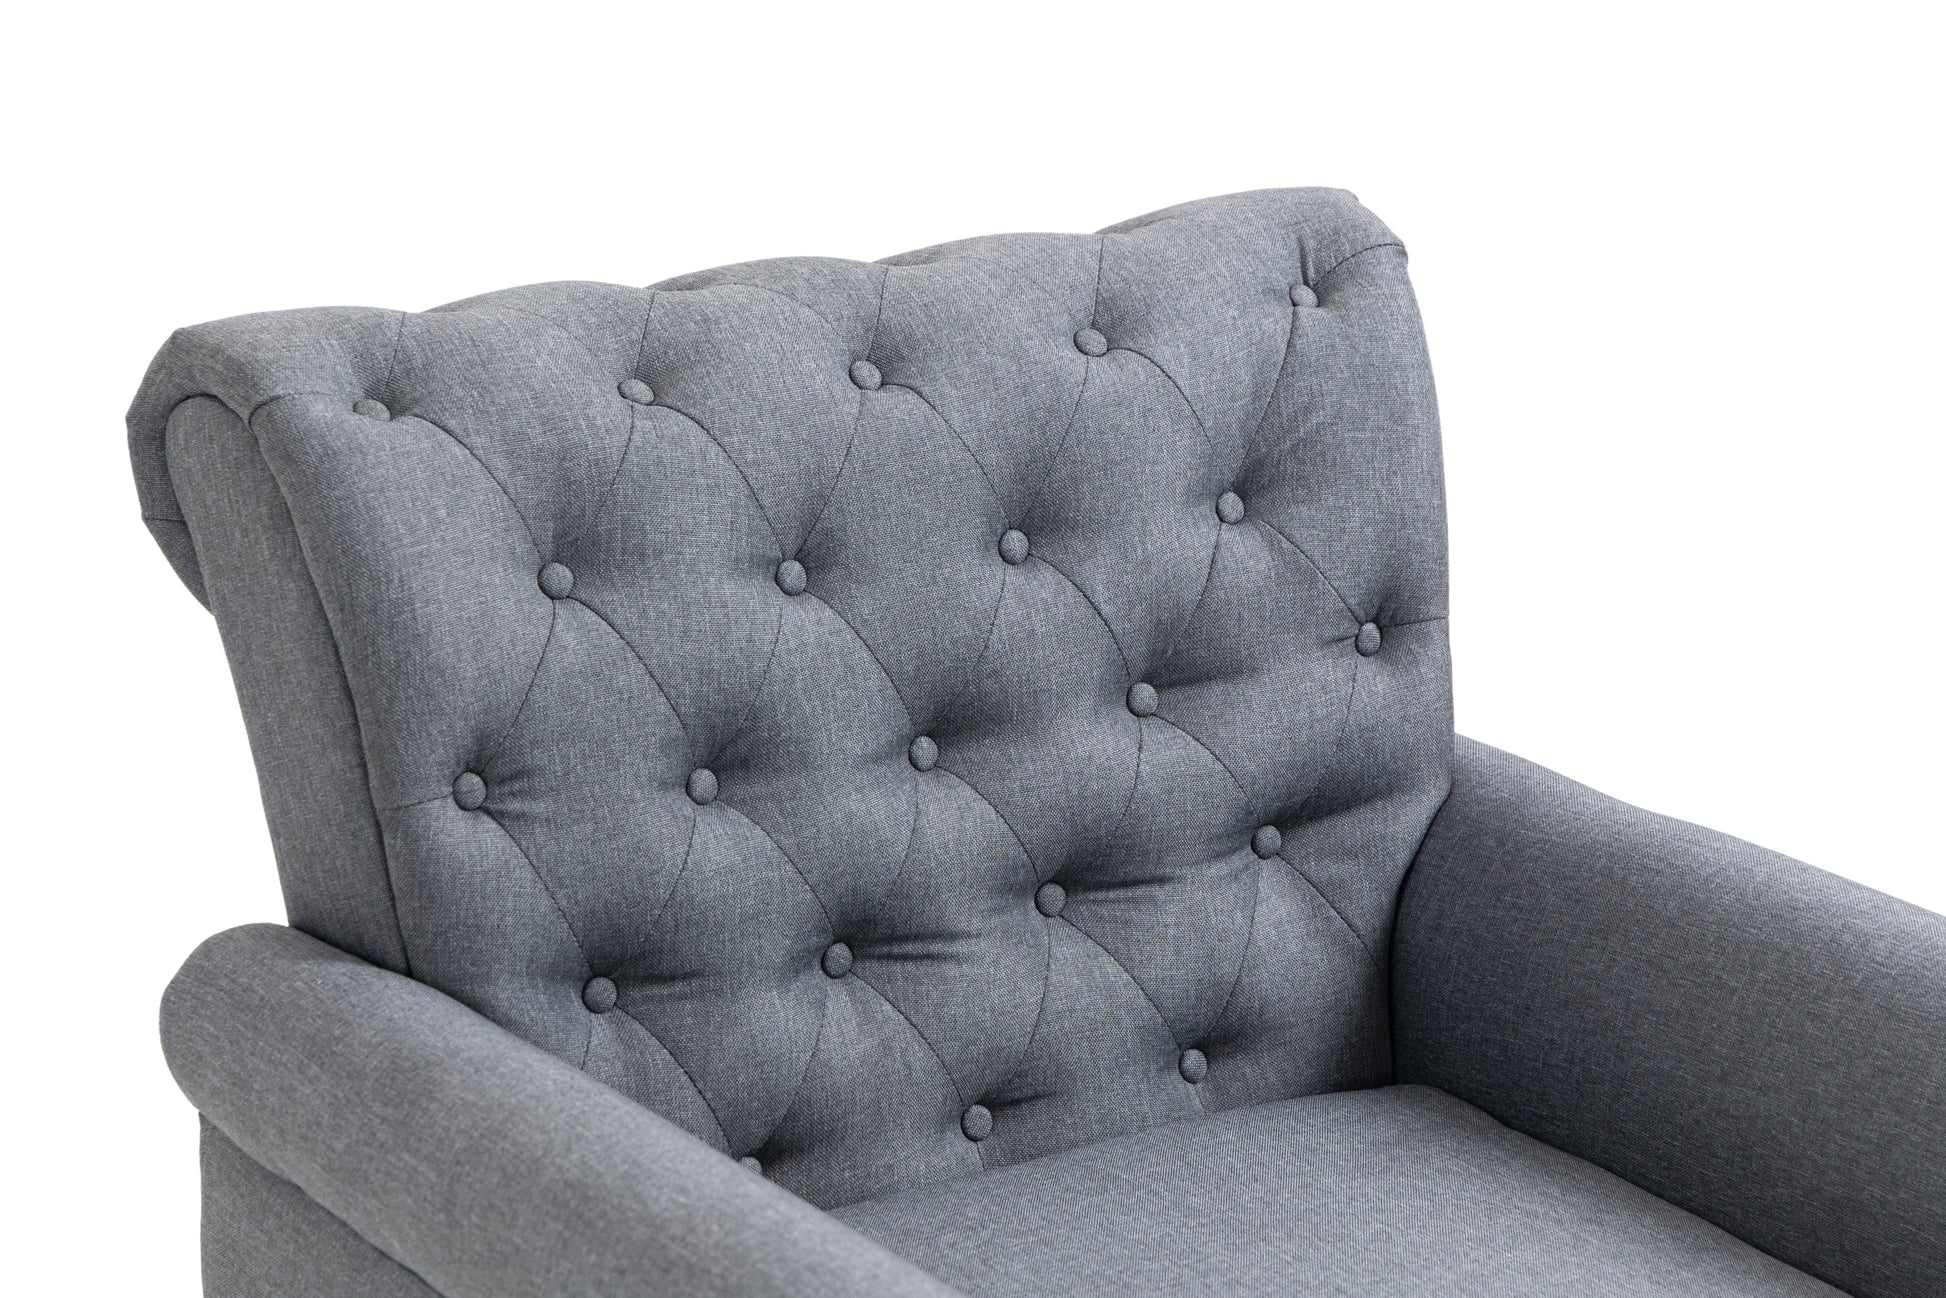 Mid Century Modern Accent Chair, Linen Armchair W